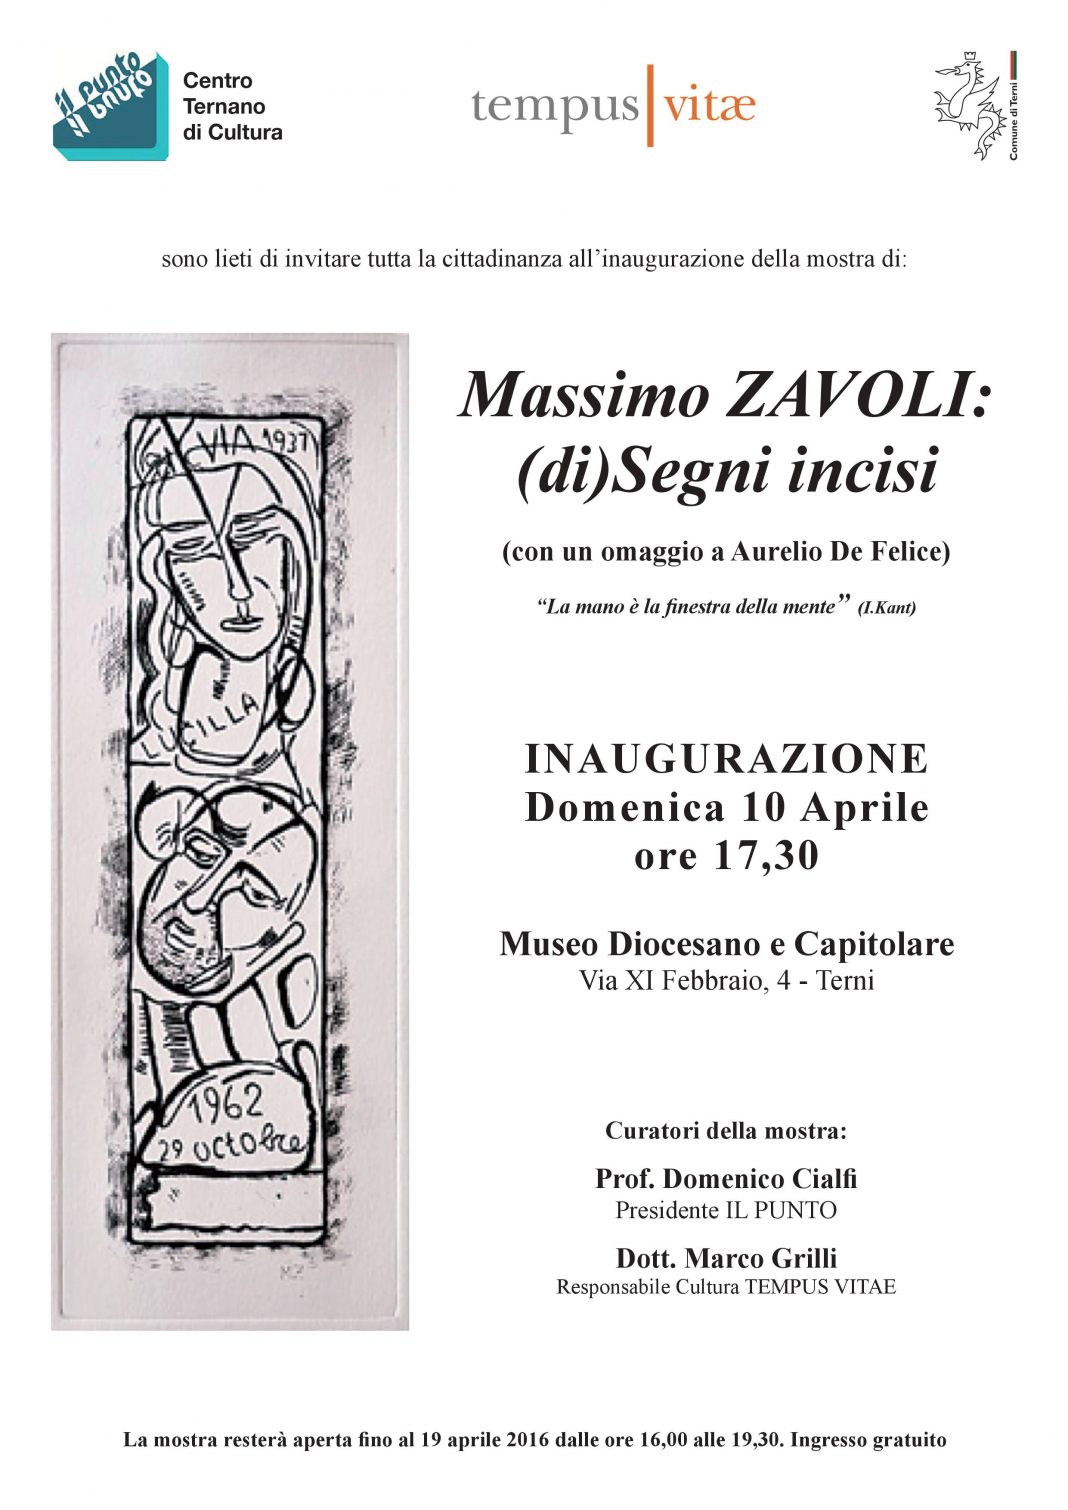 Massimo Zavoli: (di)Segni incisihttps://www.exibart.com/repository/media/eventi/2016/04/massimo-zavoli-disegni-incisi-1068x1510.jpg